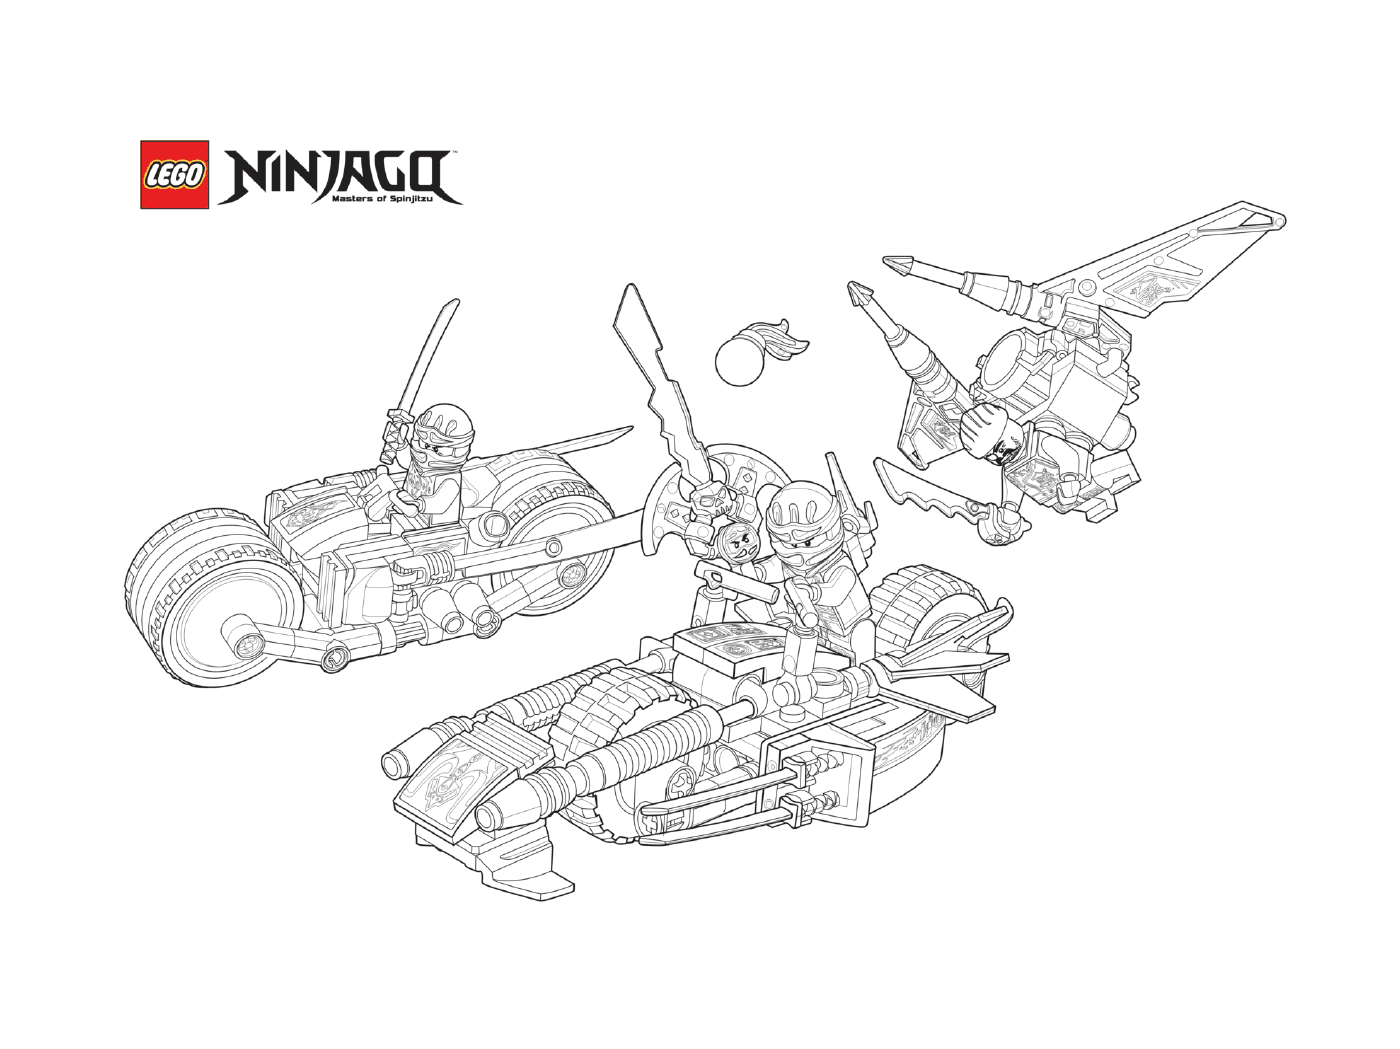  Motorrad Auto cool ninjago lego 